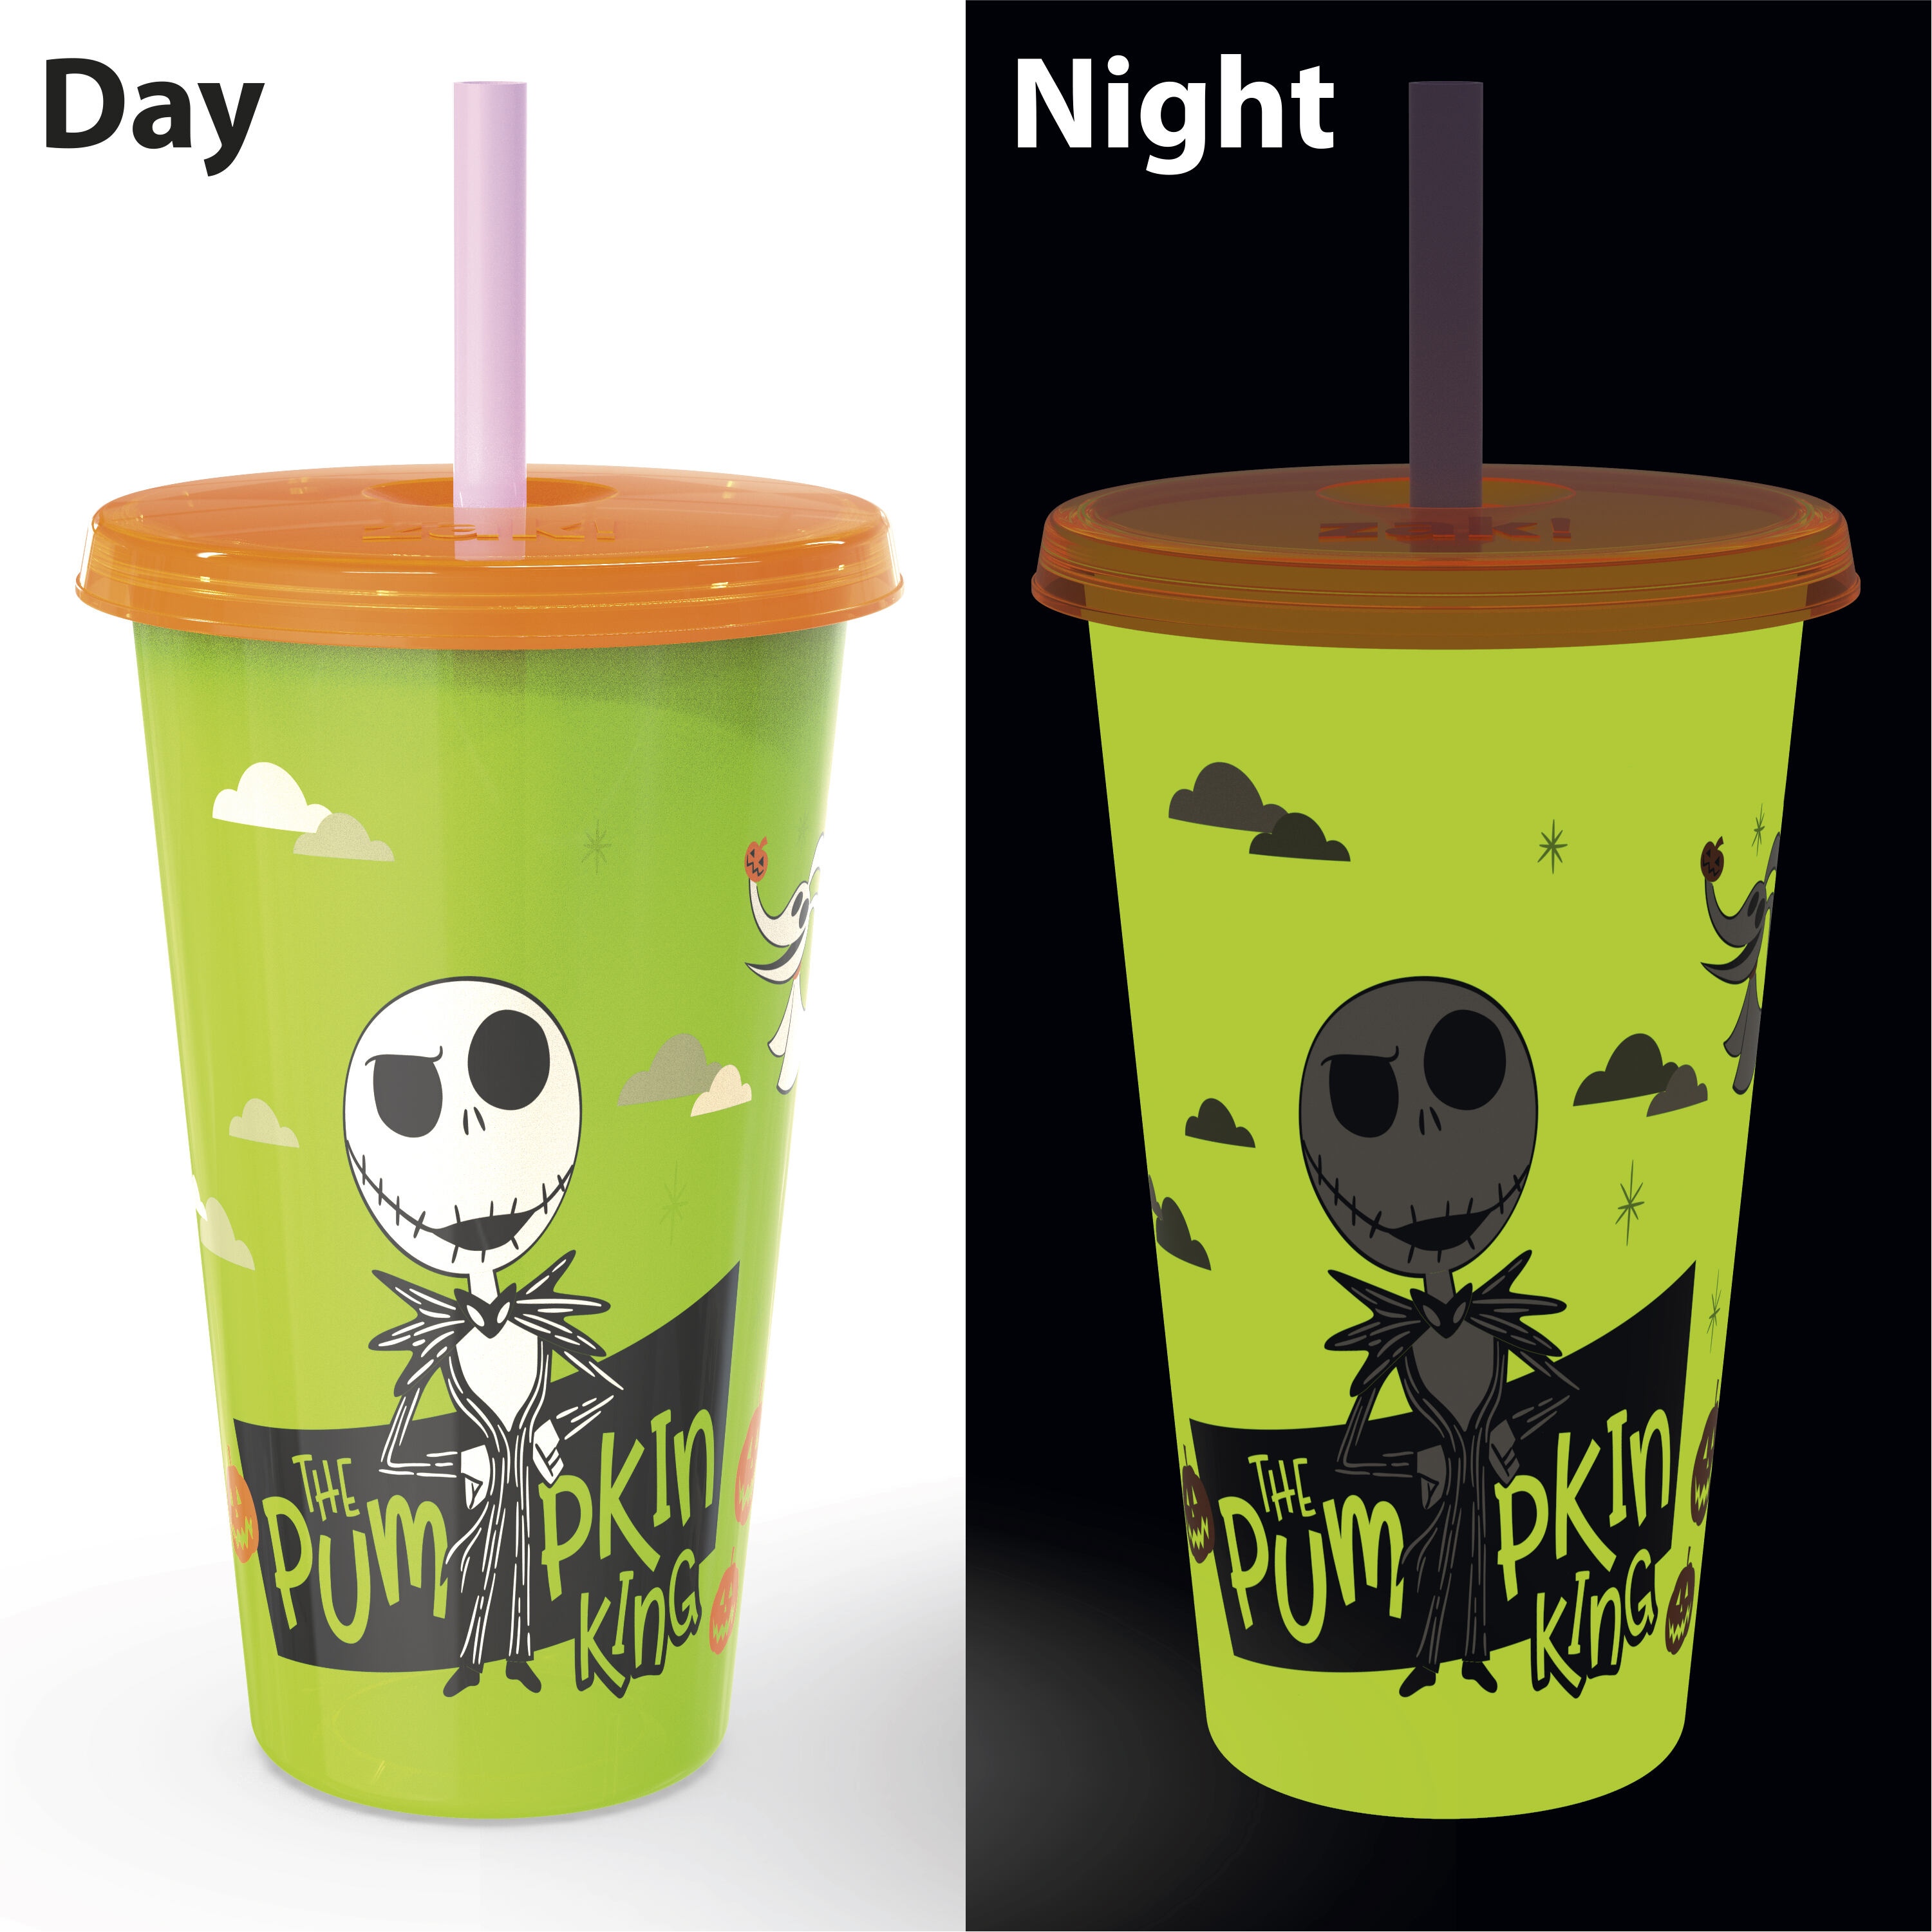 Details about   Nightmare Before Christmas Jack Skellington Light-Up Tumbler Mug with Straw 